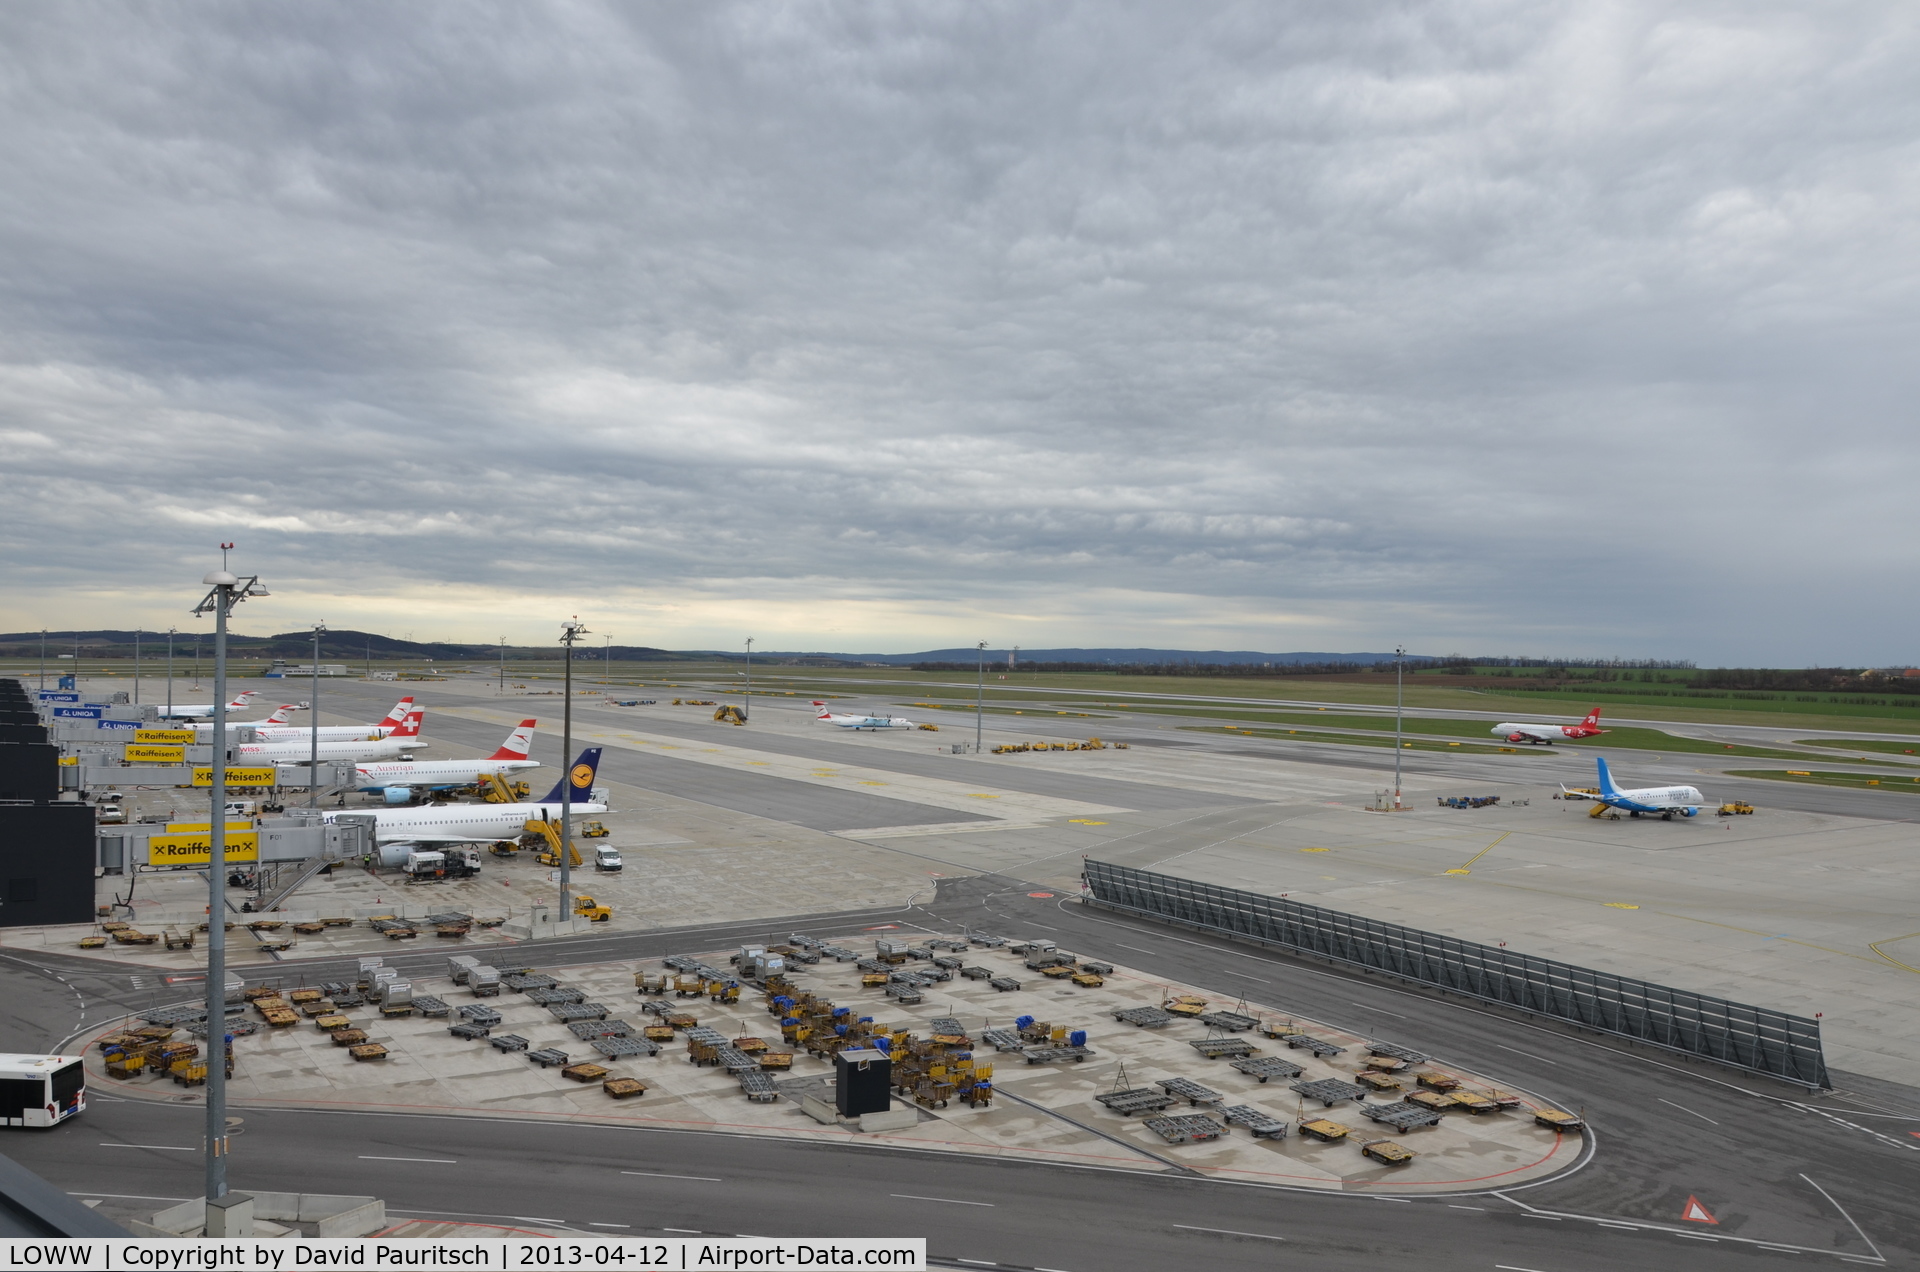 Vienna International Airport, Vienna Austria (LOWW) - View from the visitors deck.